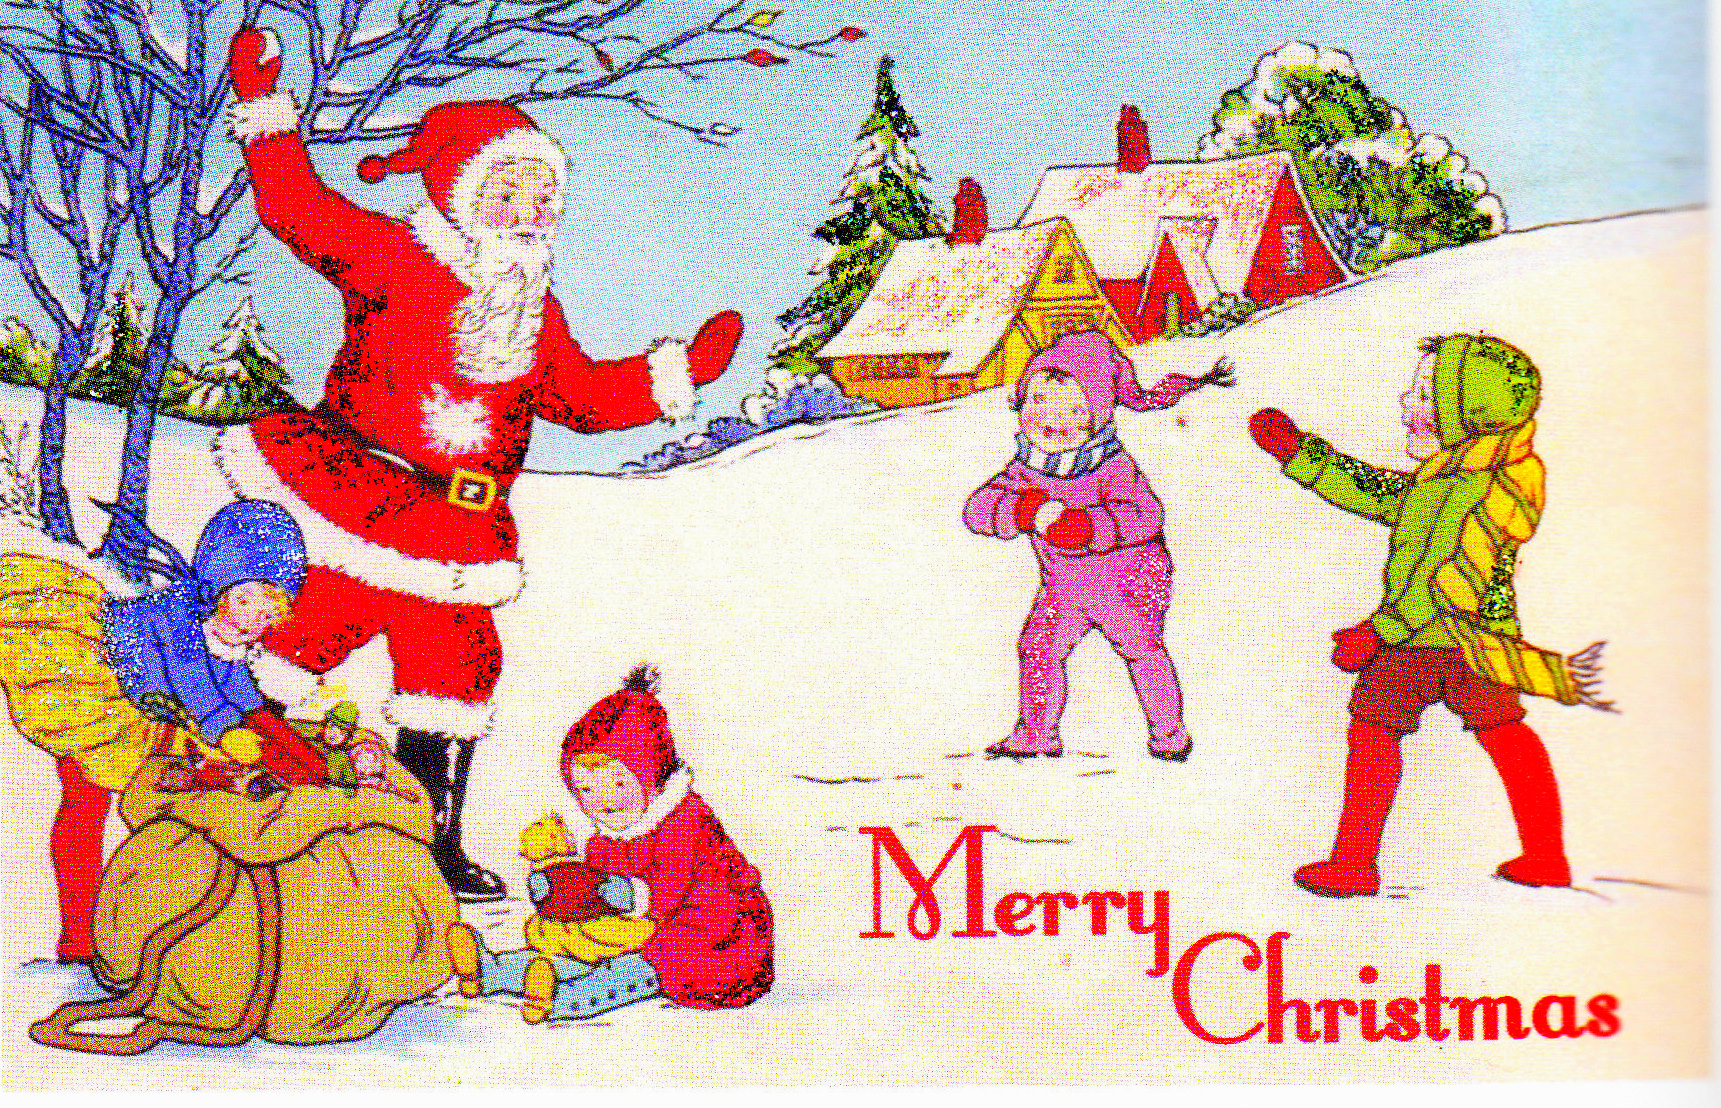 http://www.seasonalwisdom.com/wp-content/uploads/2011/12/20s-santa-and-kids-1.jpg